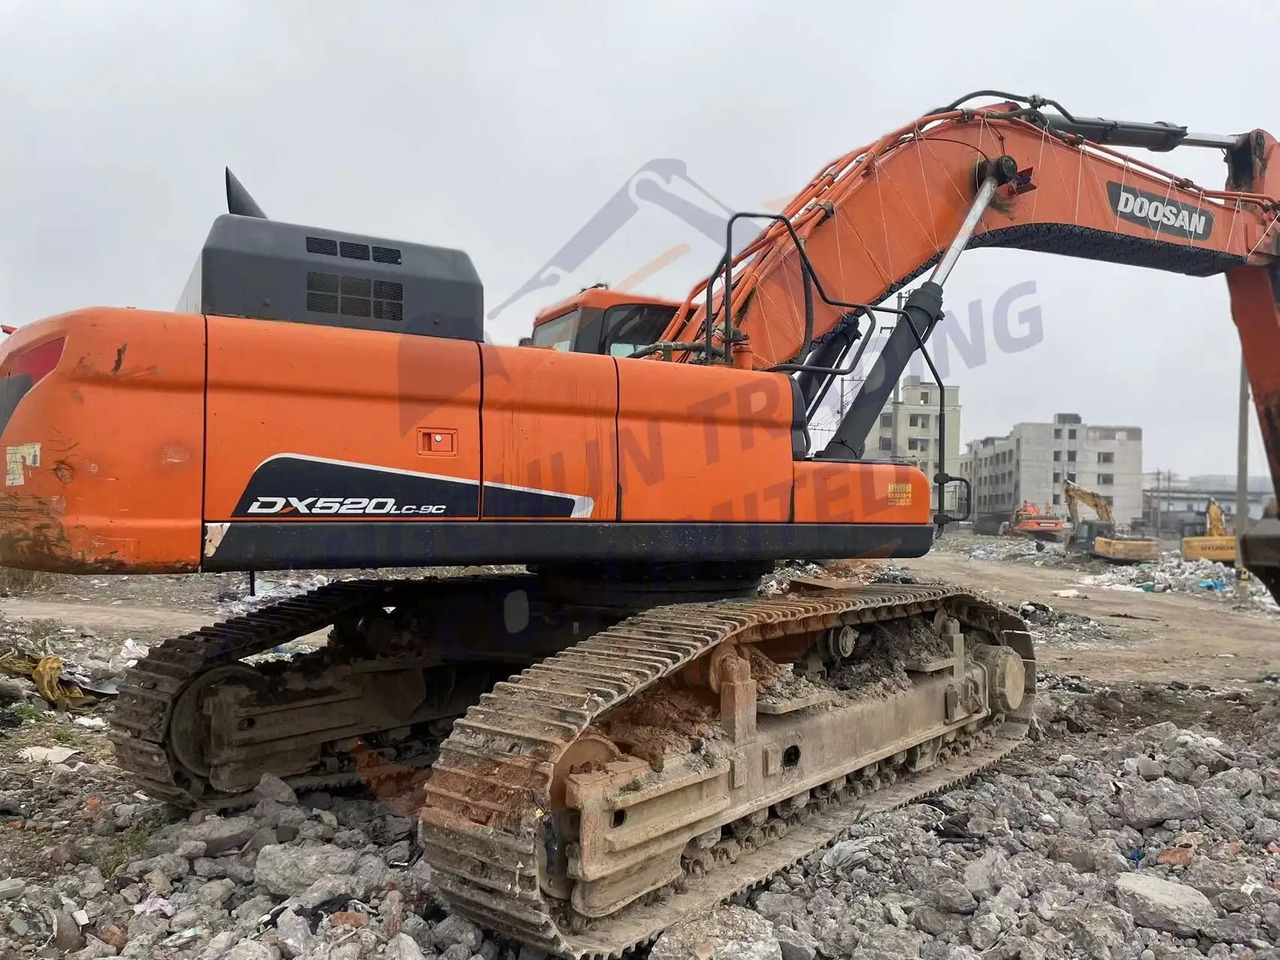 Гусеничный экскаватор Low running hours Used Doosan excavator DX520LC-9C in good condition for sale: фото 3